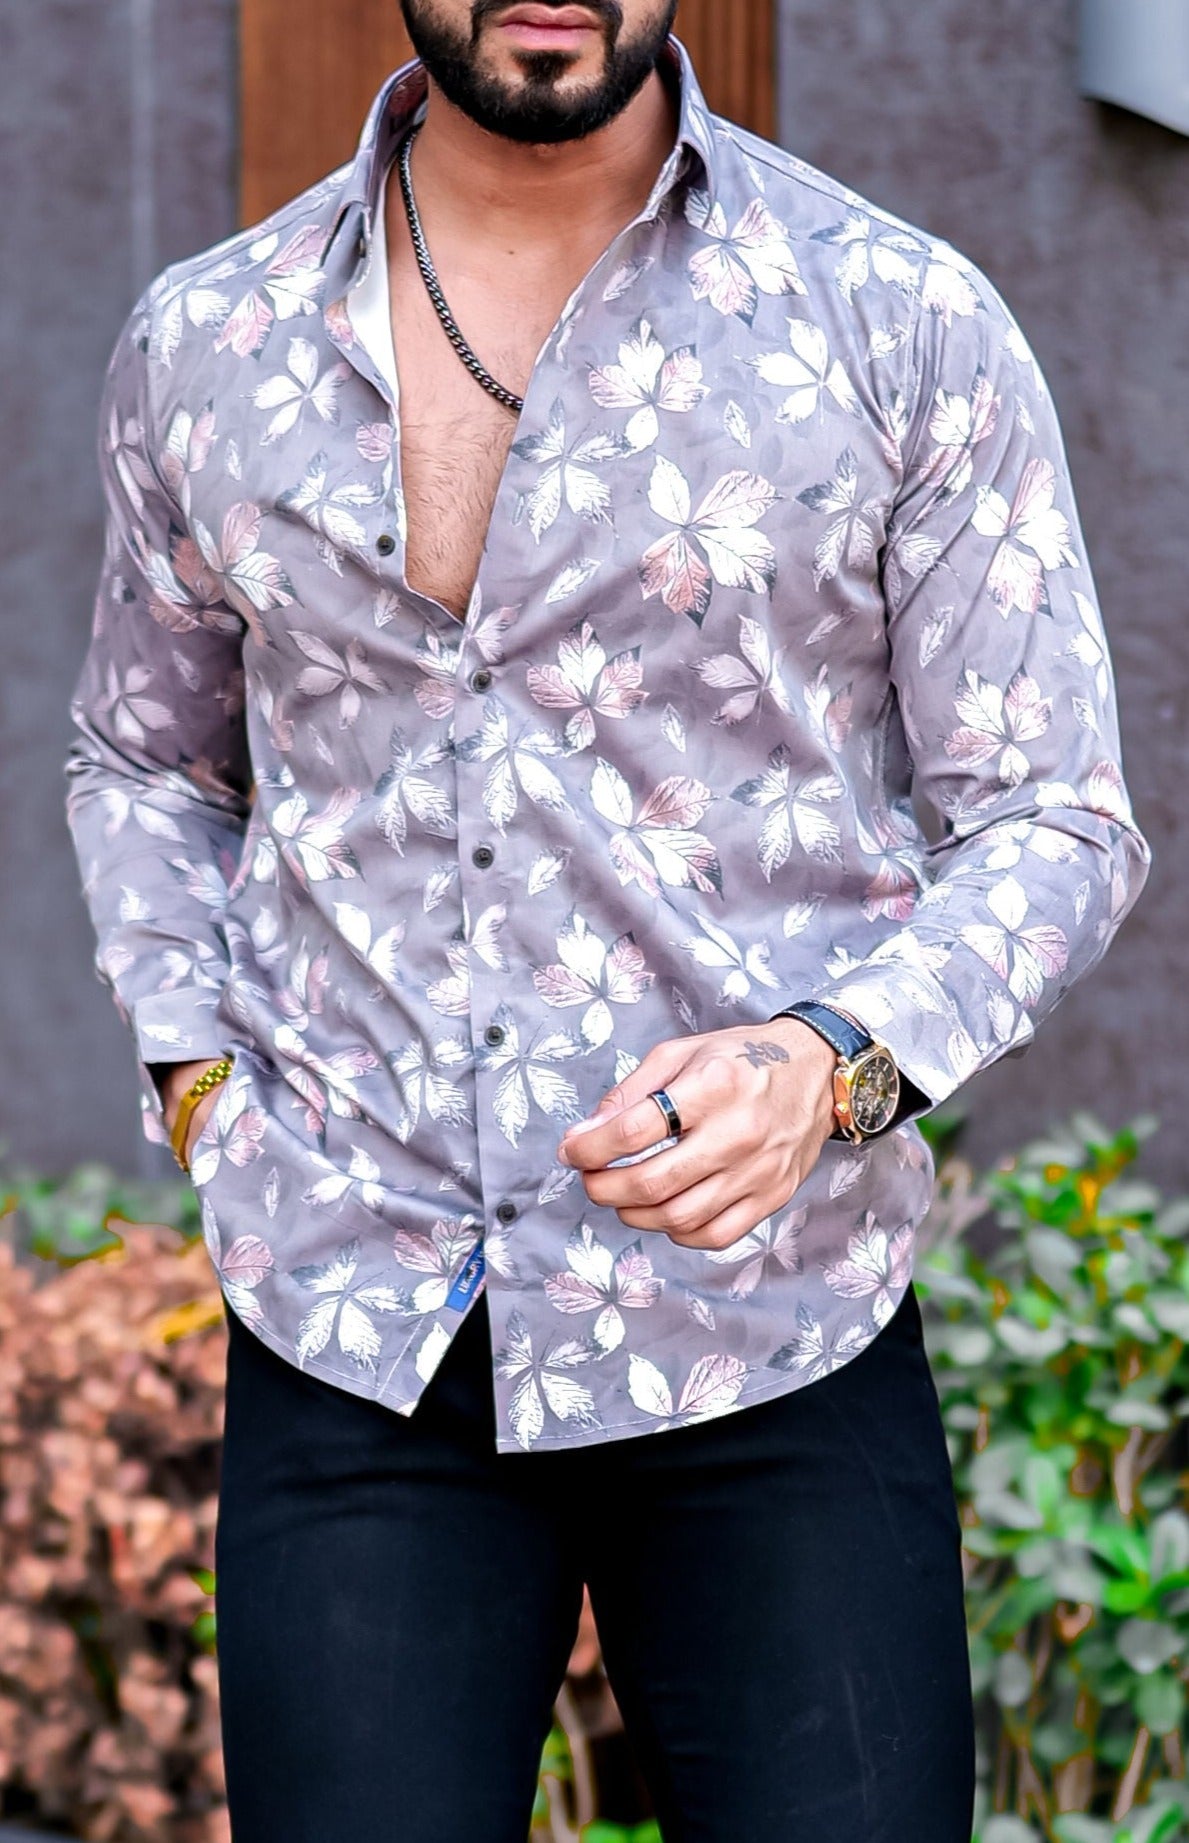 a man wearing a shirt with a flower pattern